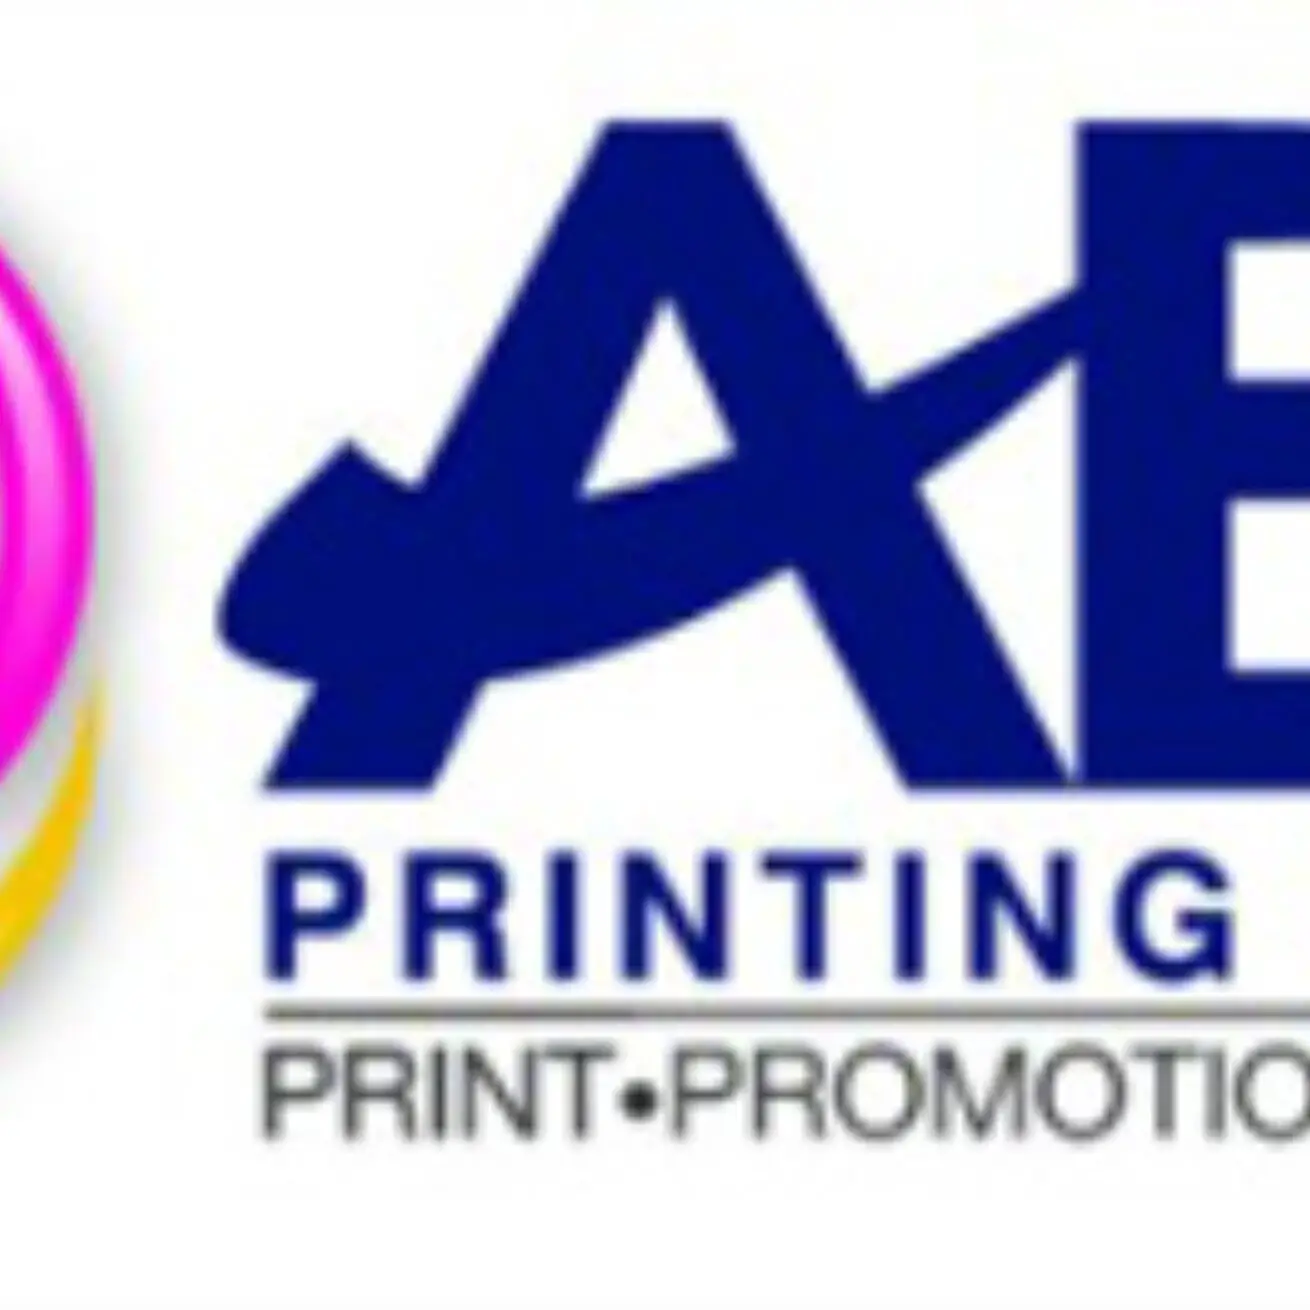 ABC Printing Company - Chicago, IL, USA